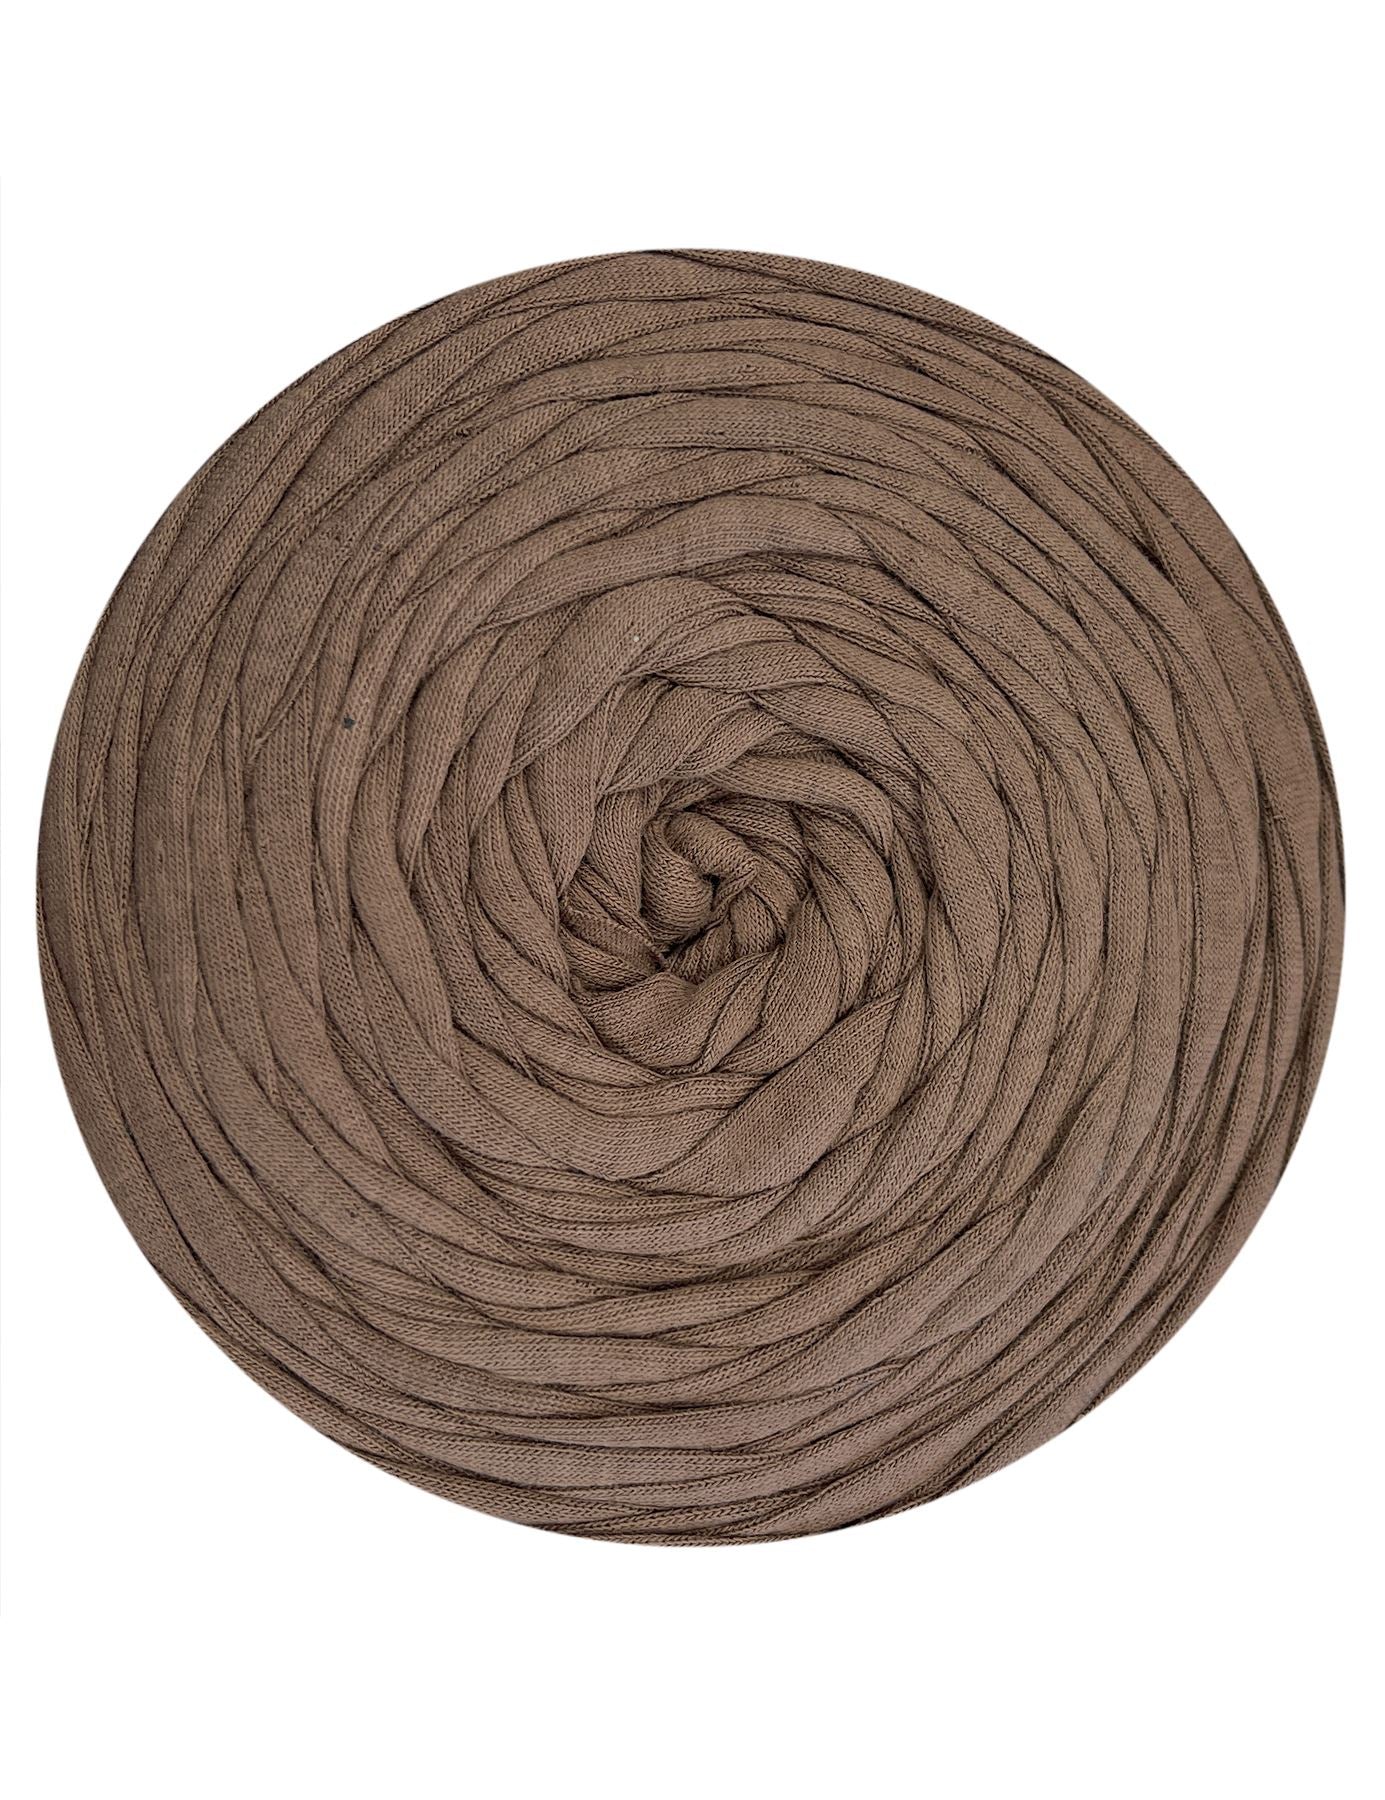 Coffee brown t-shirt yarn (100-120m)